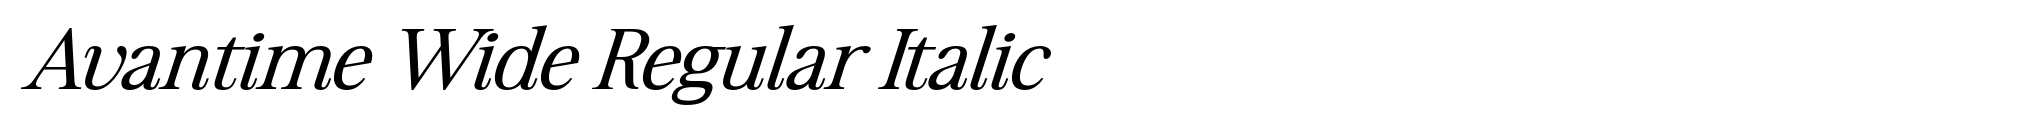 Avantime Wide Regular Italic image